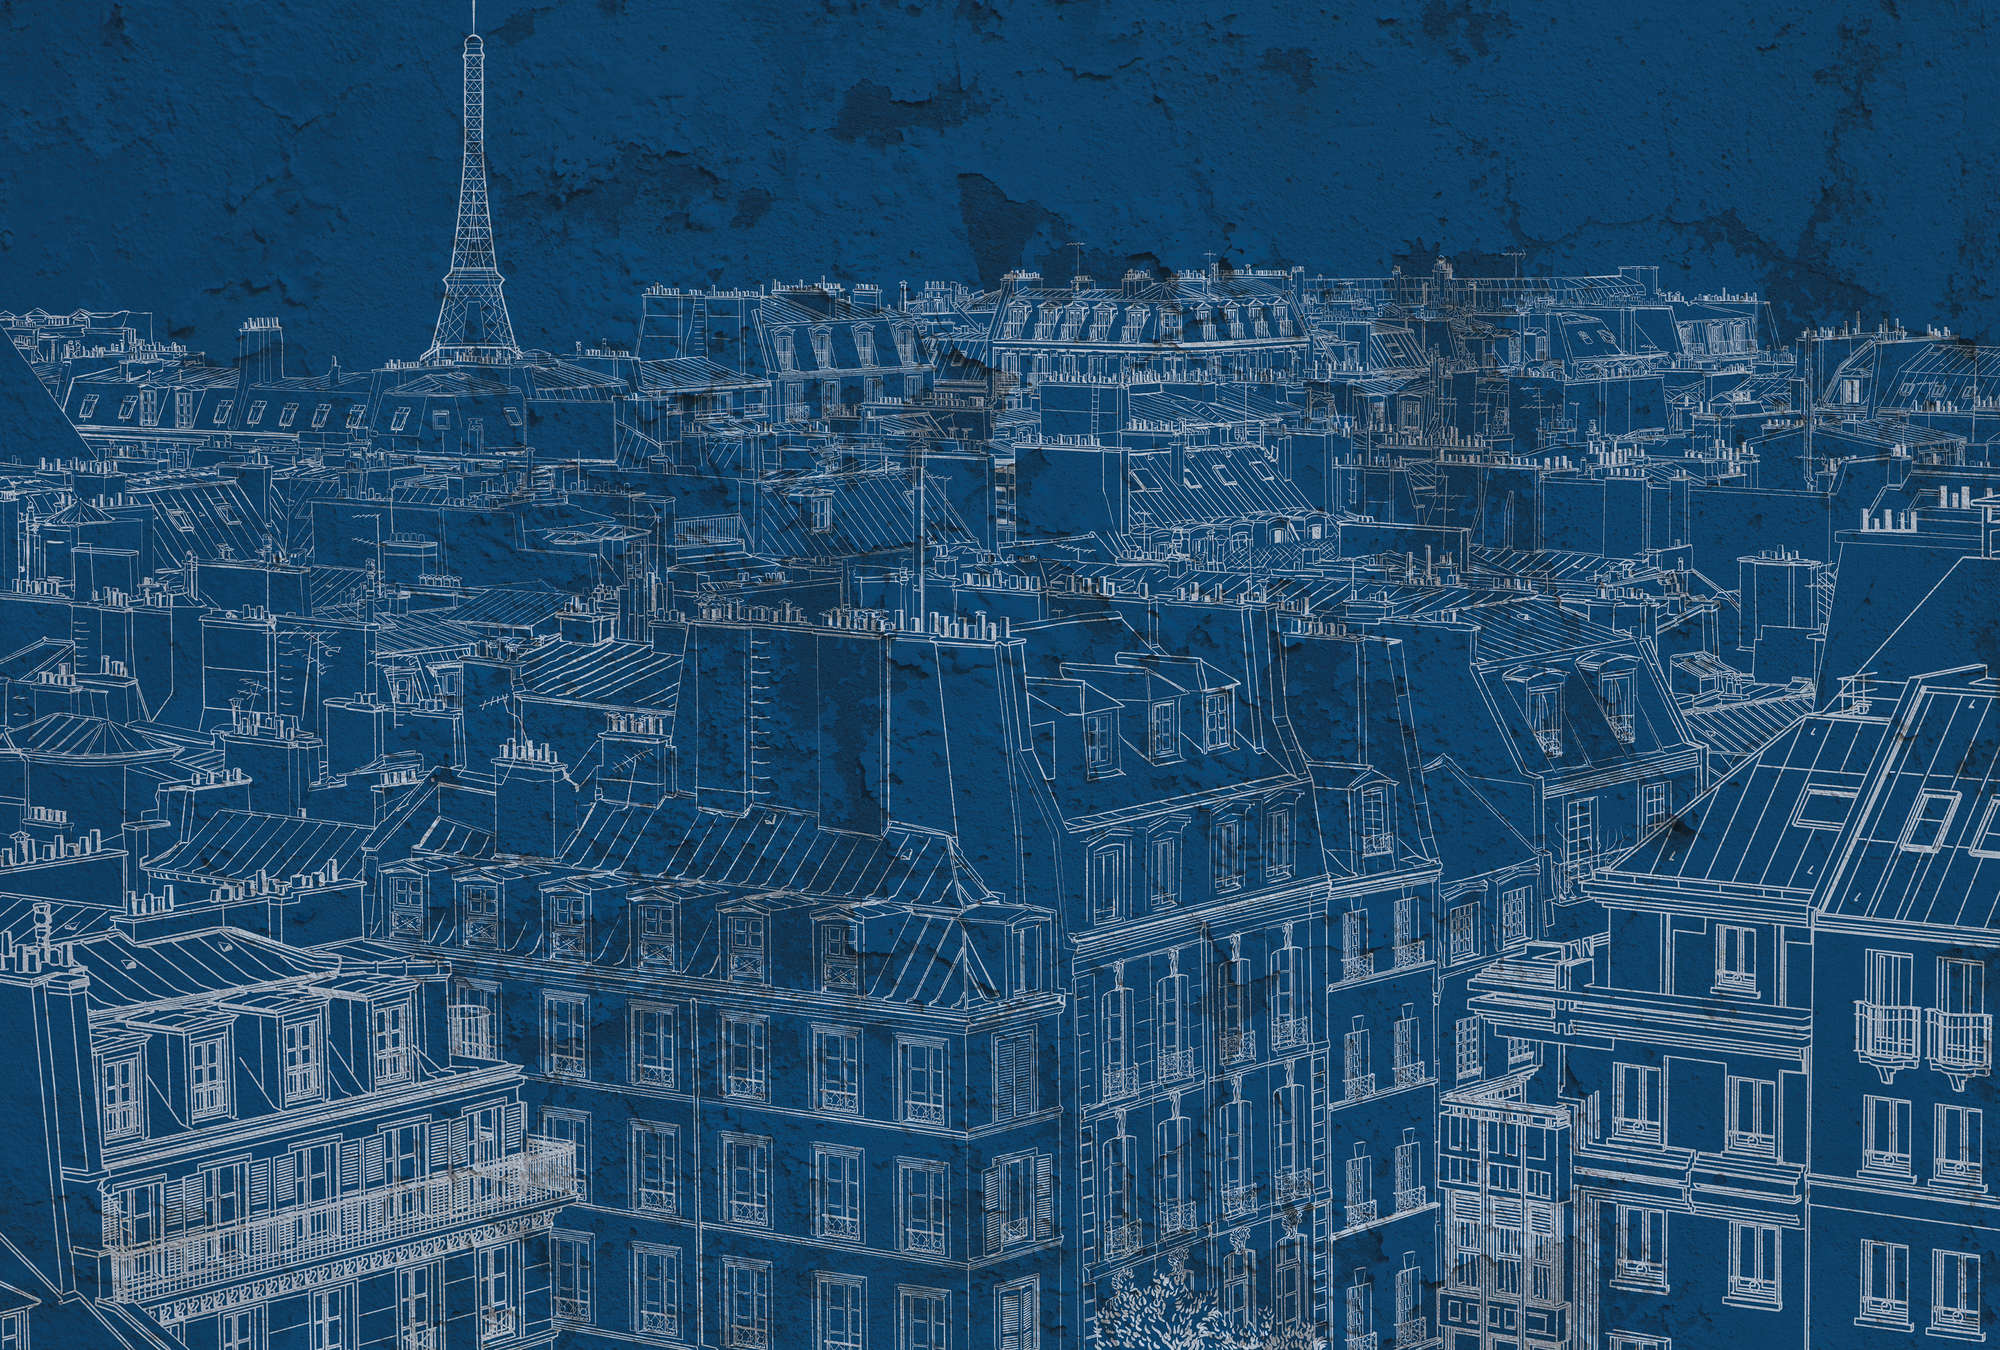             Papel pintado "Blueprint Design & Skyline" de París - Azul, Blanco
        